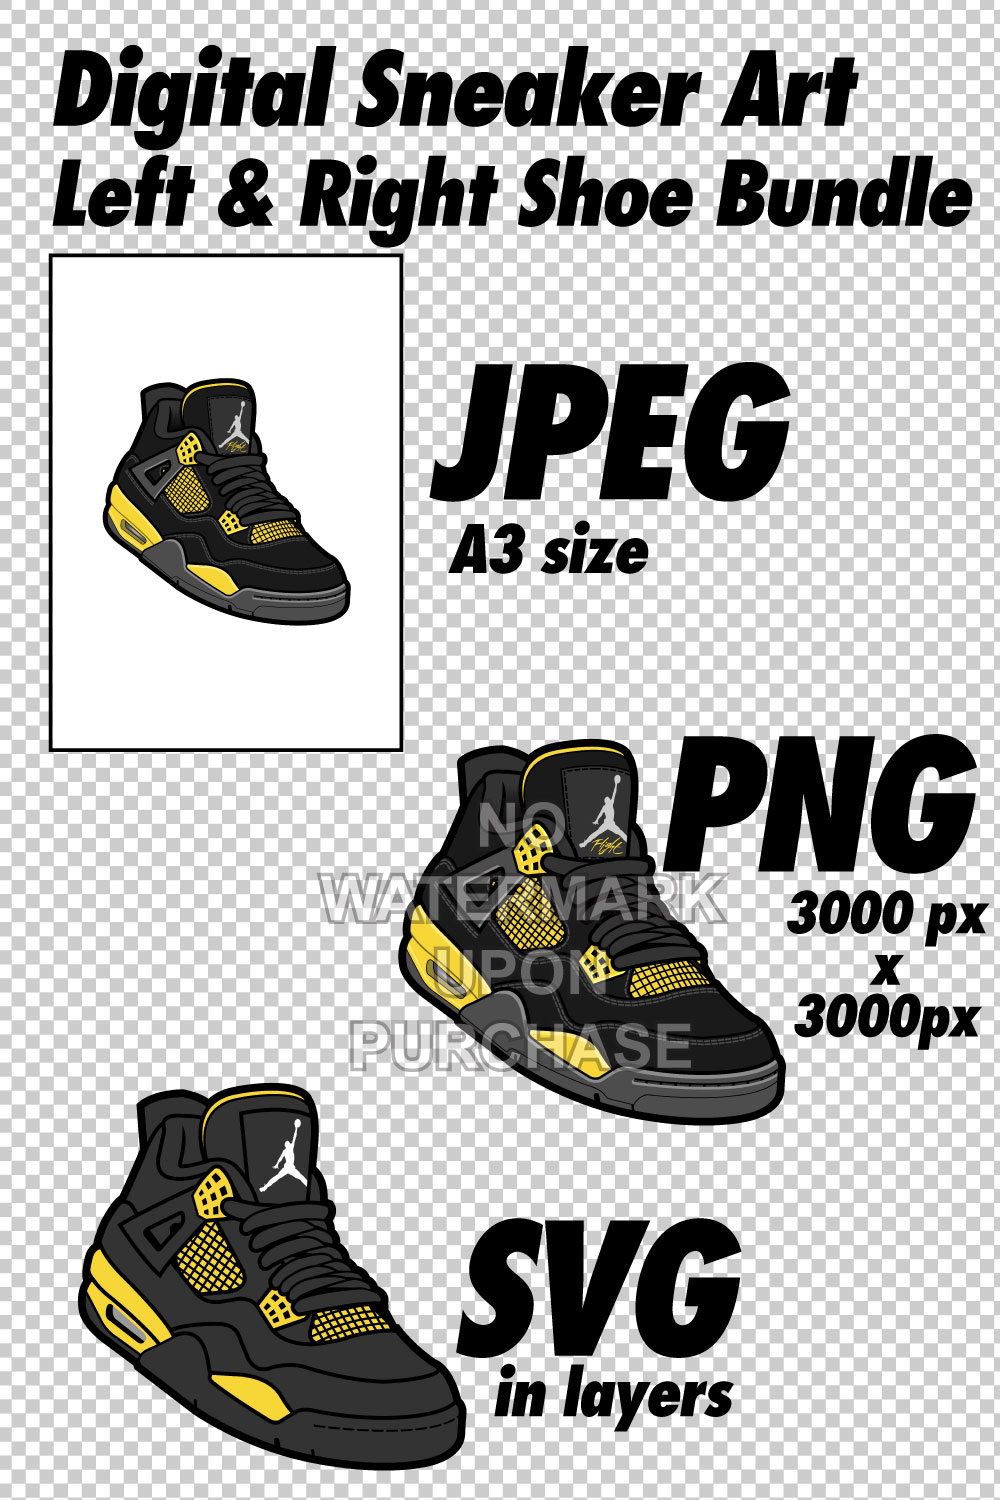 Air Jordan 4 Thunder JPEG PNG SVG Sneaker Art right & left shoe bundle pinterest preview image.